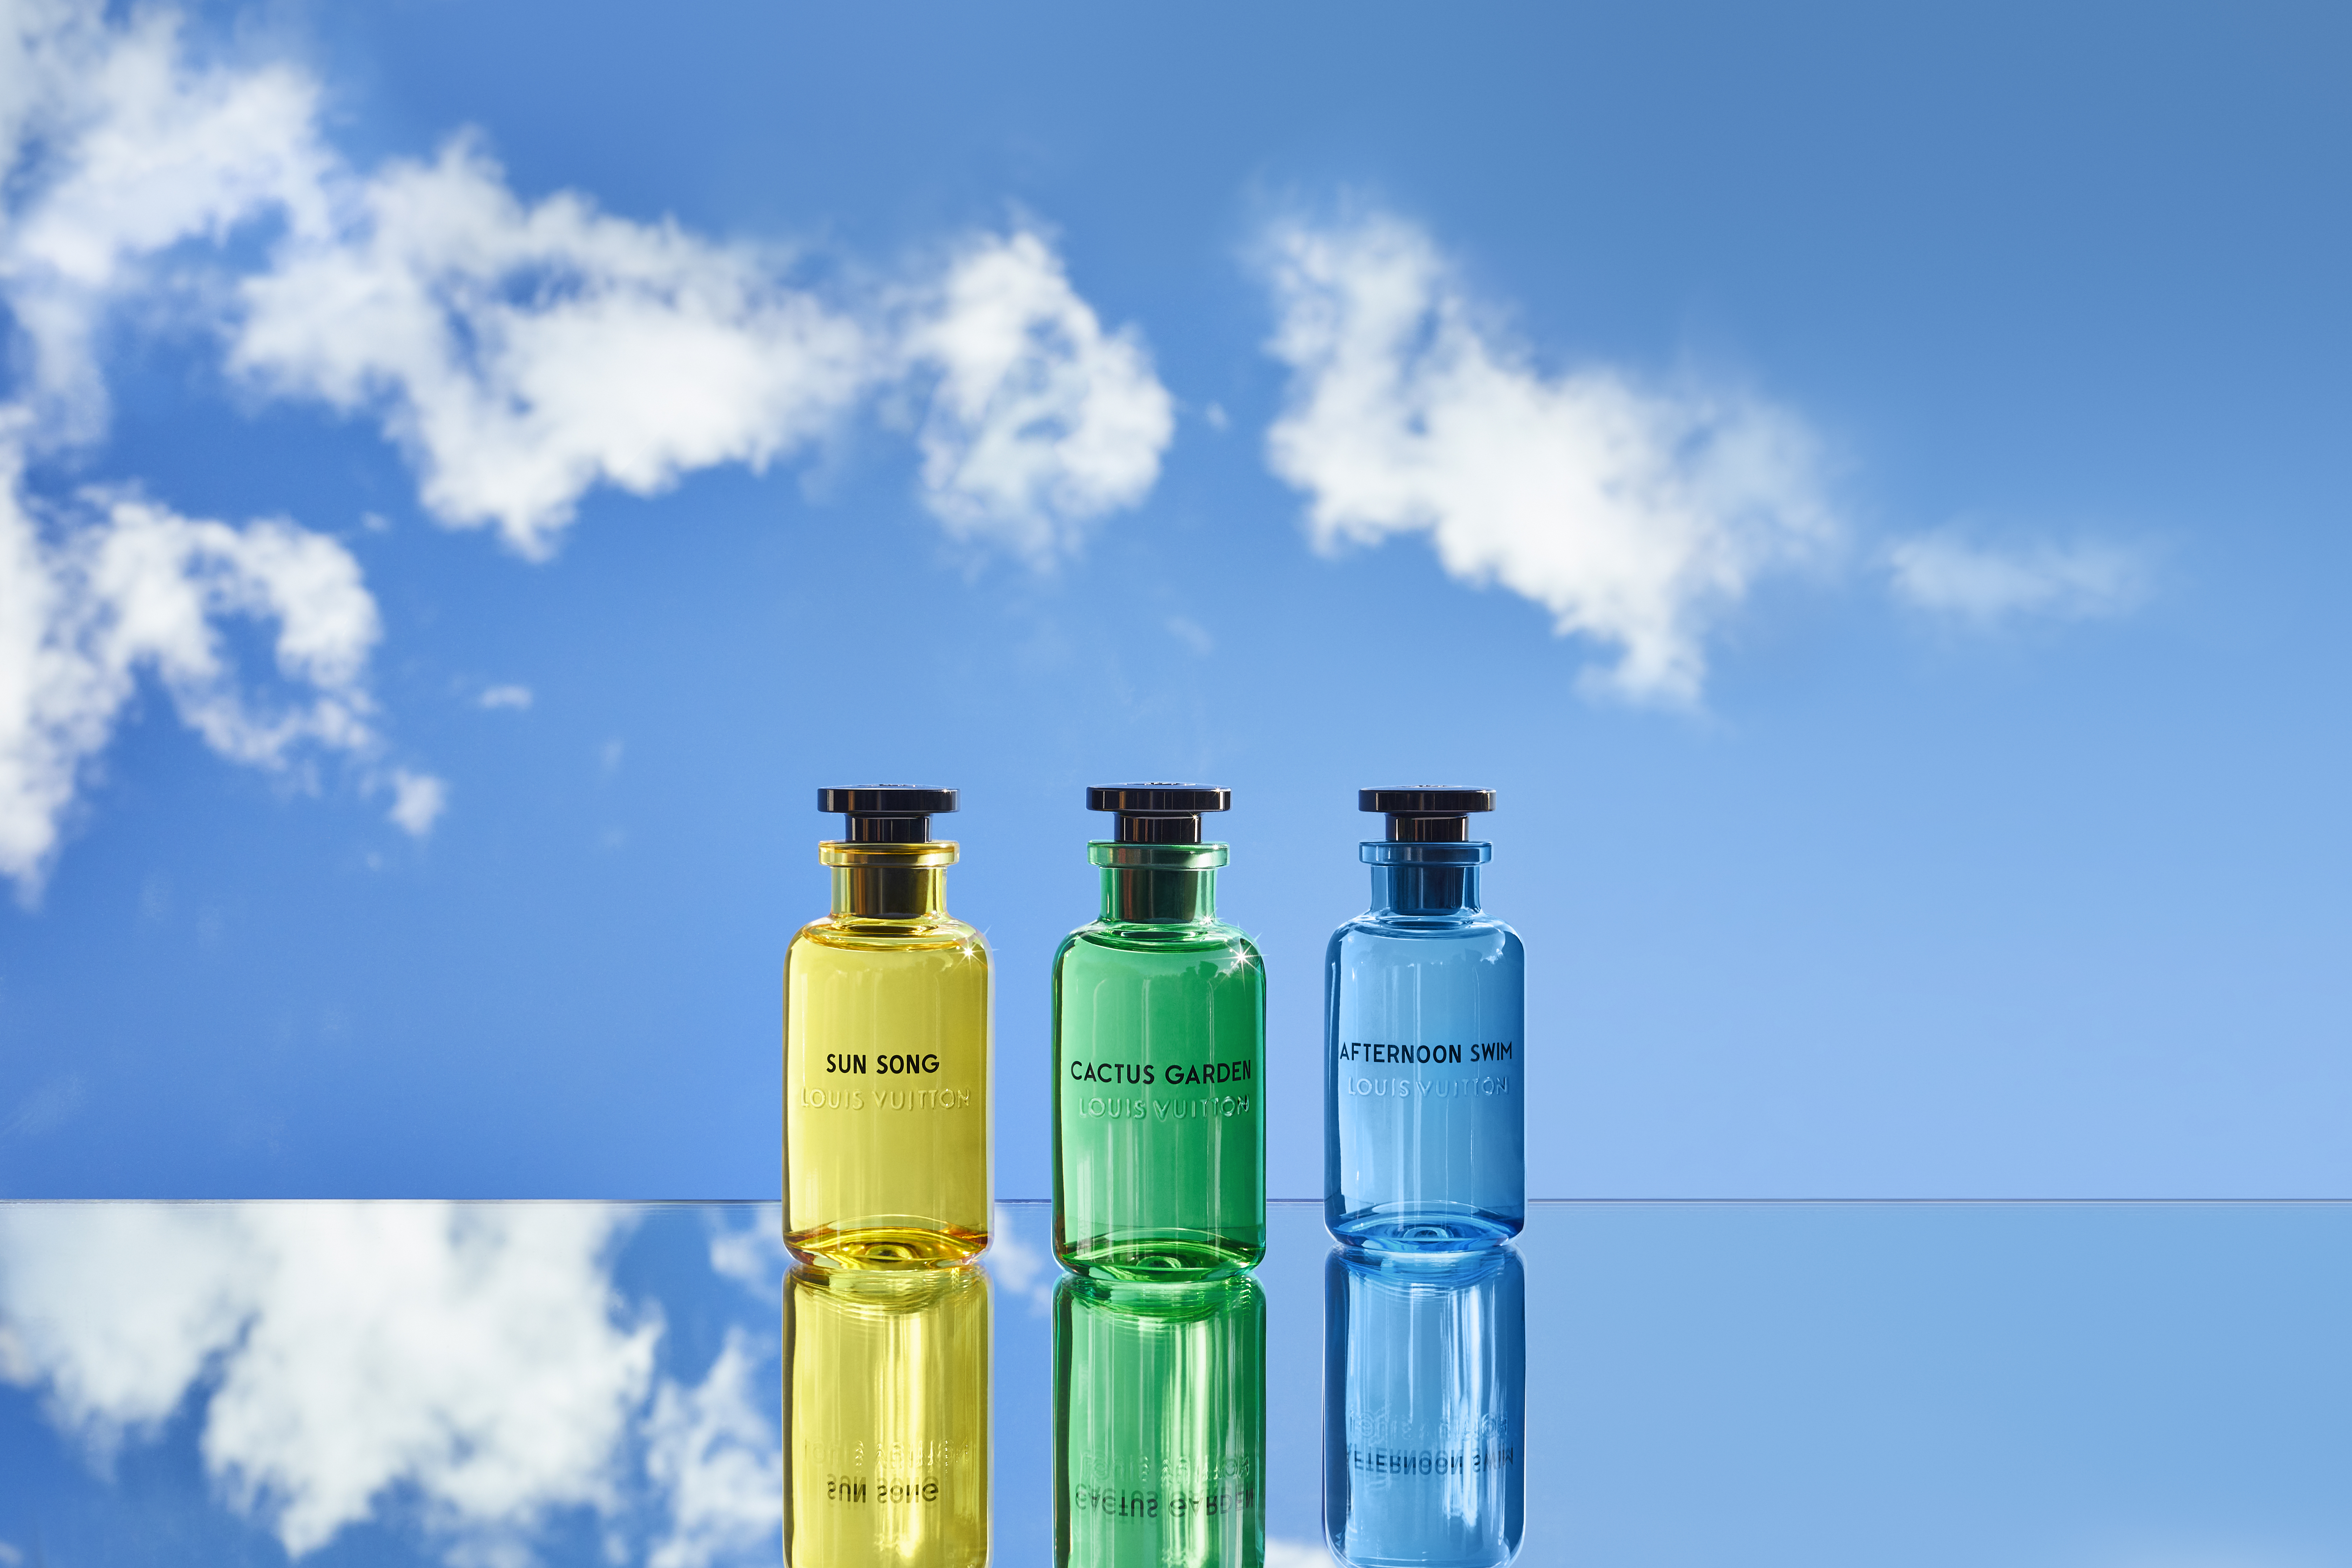 Louis Vuitton Debuts Their First Unisex Fragrances